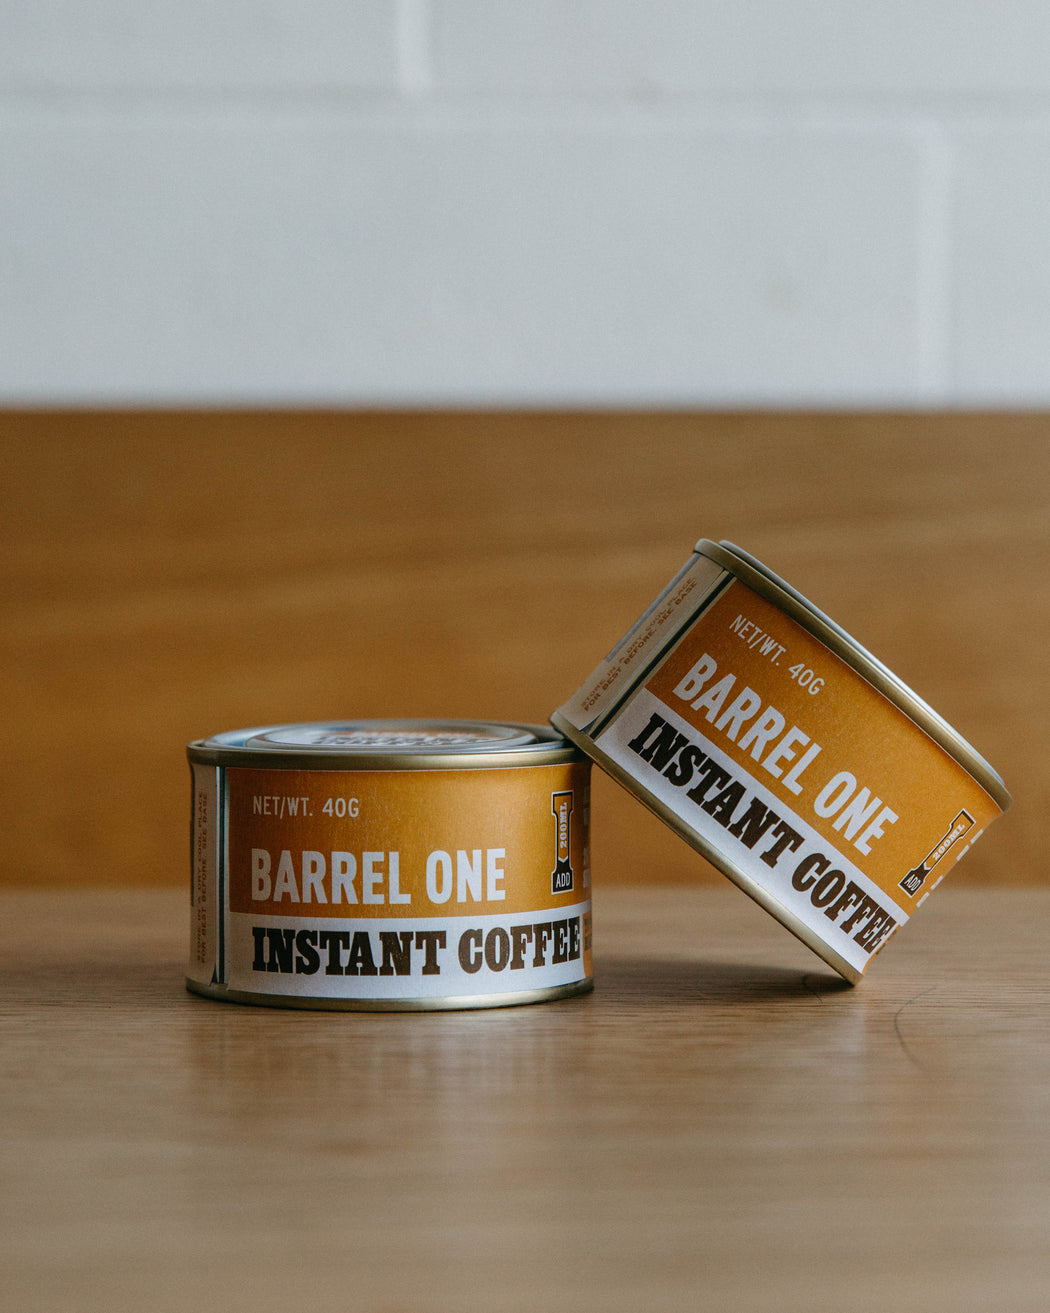 Barrel One instant Coffee tin